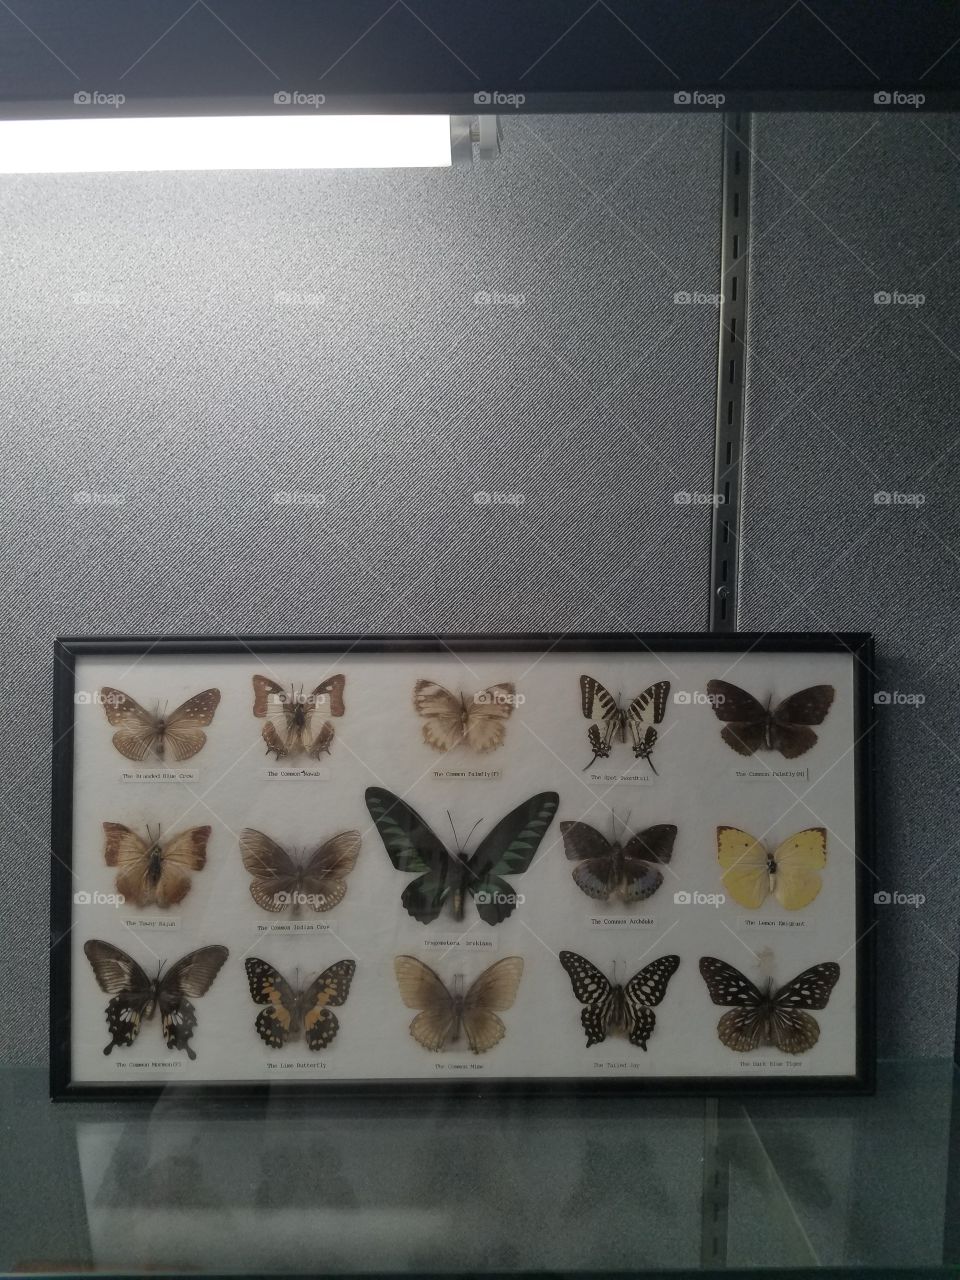 Different types of butterflies